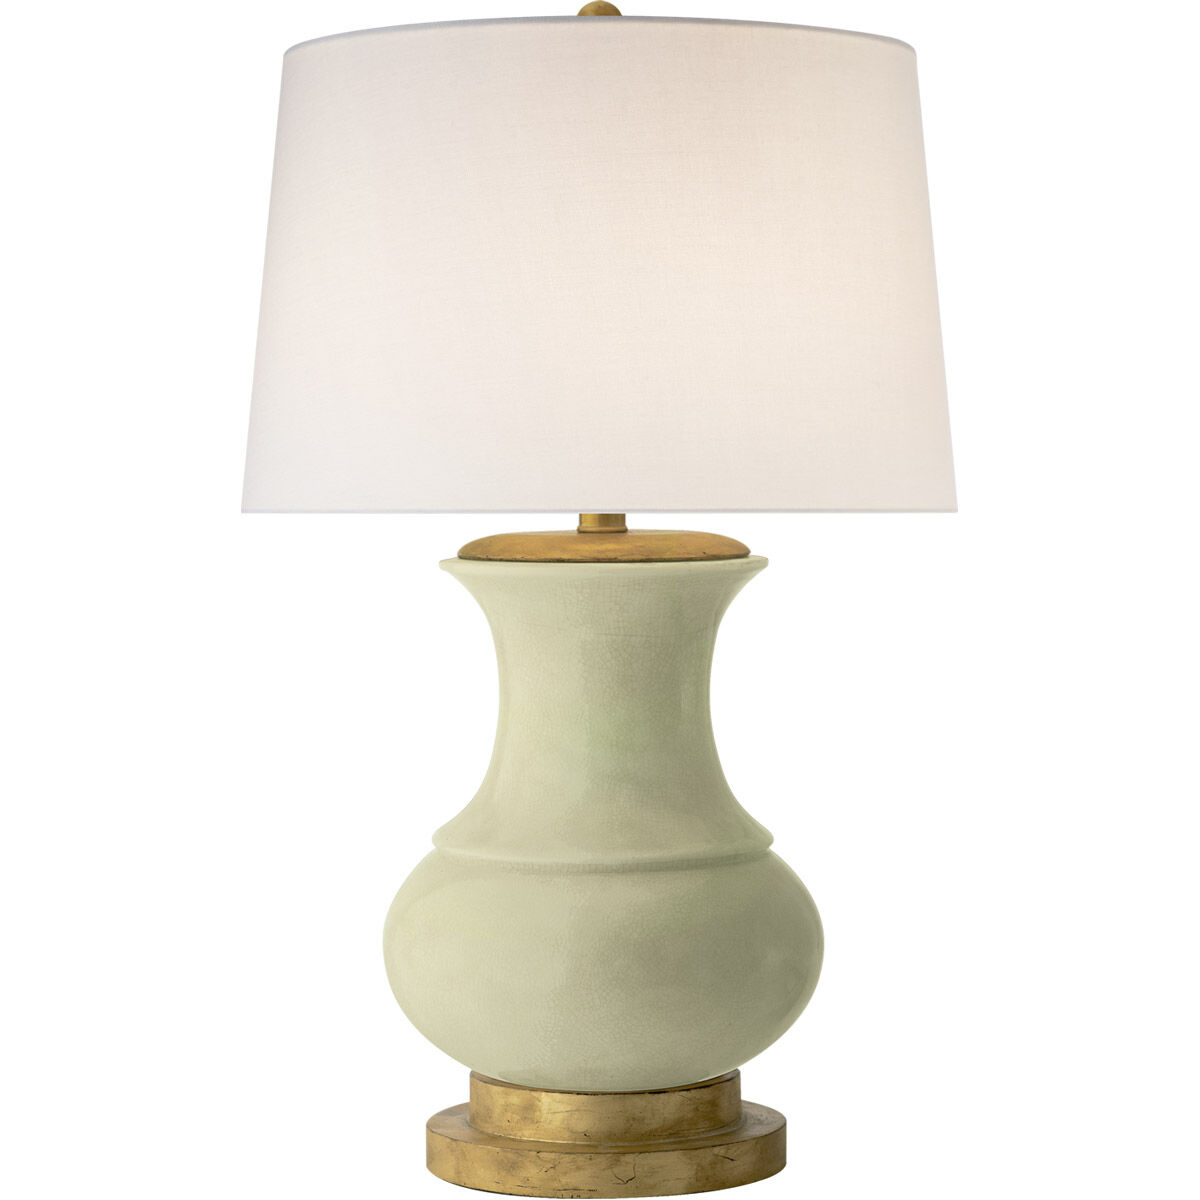 Chapman & Myers Deauville Table Lamp